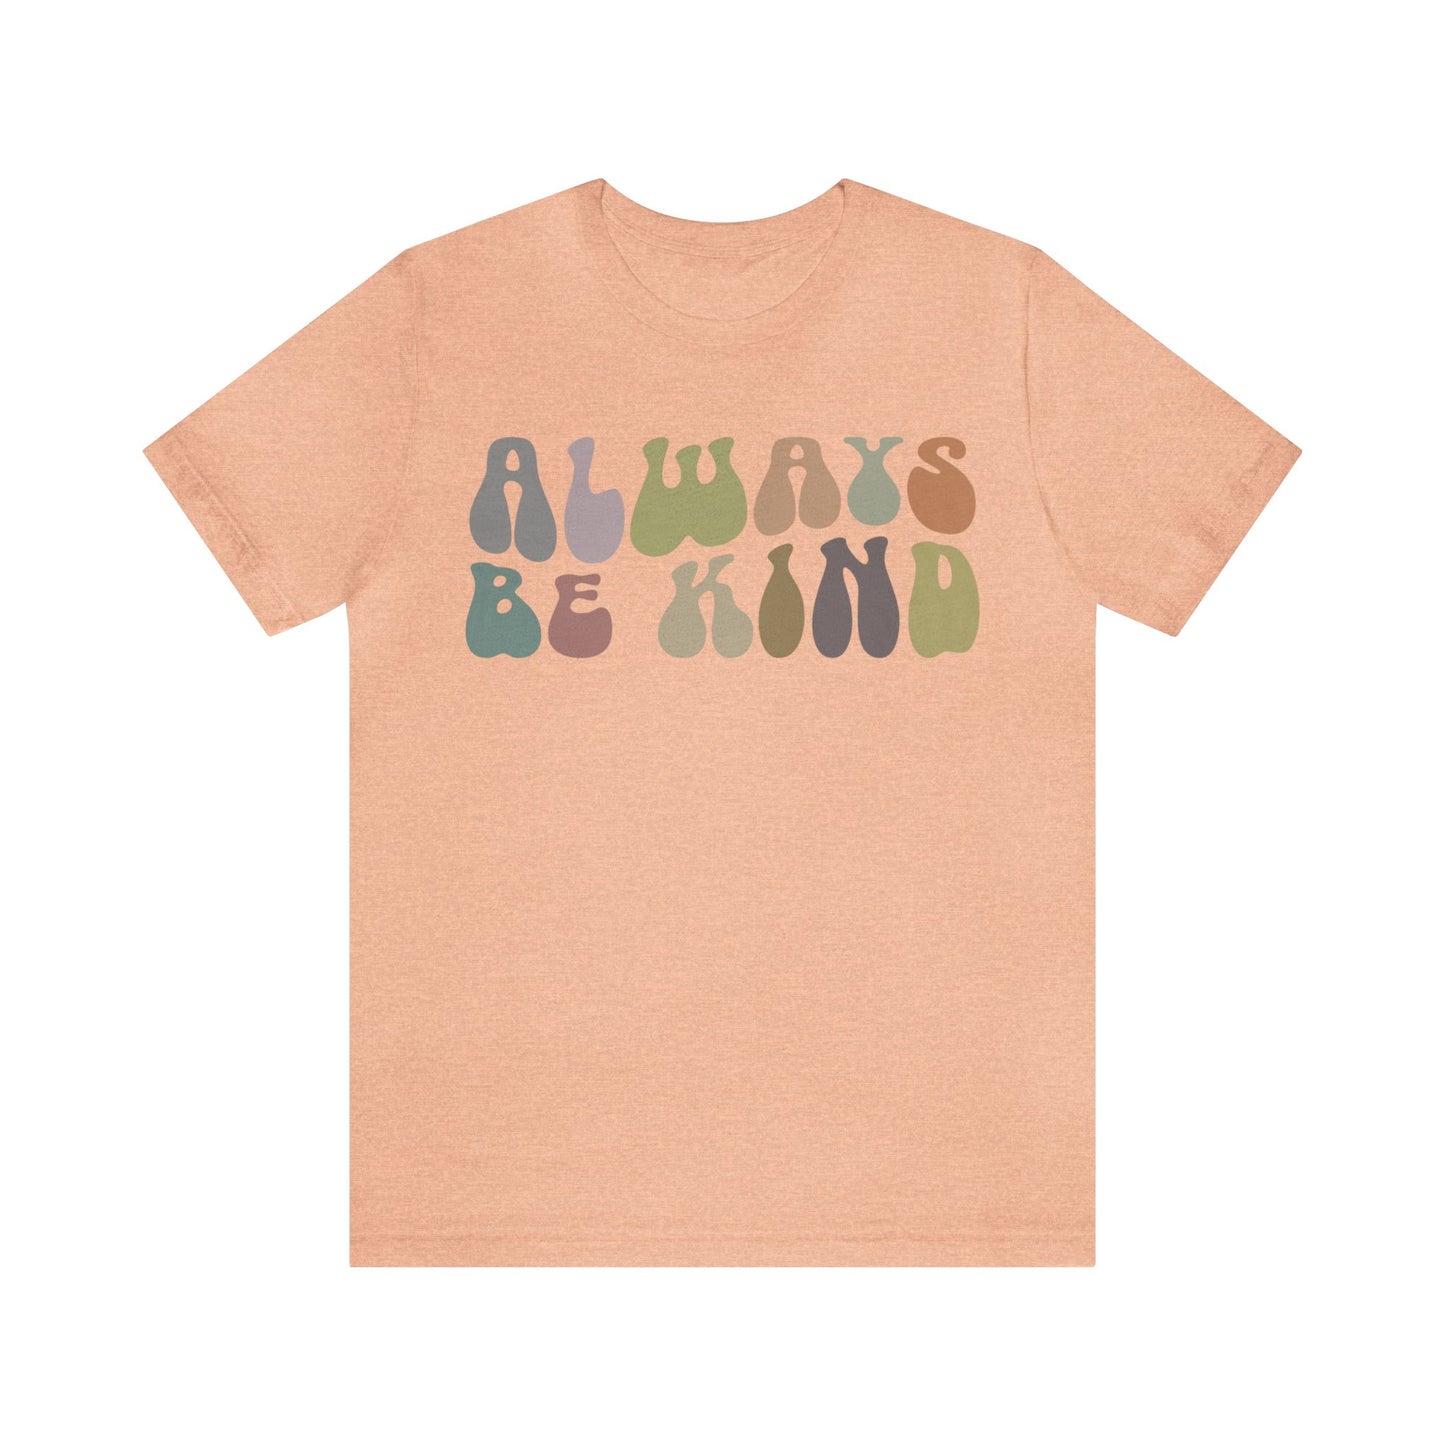 Always Be Kind Shirt, Positivity Shirt, Kind Mom Shirt, Be a Kind Human Shirt, Cute Inspirational Shirt, Kindness Shirt, T1371